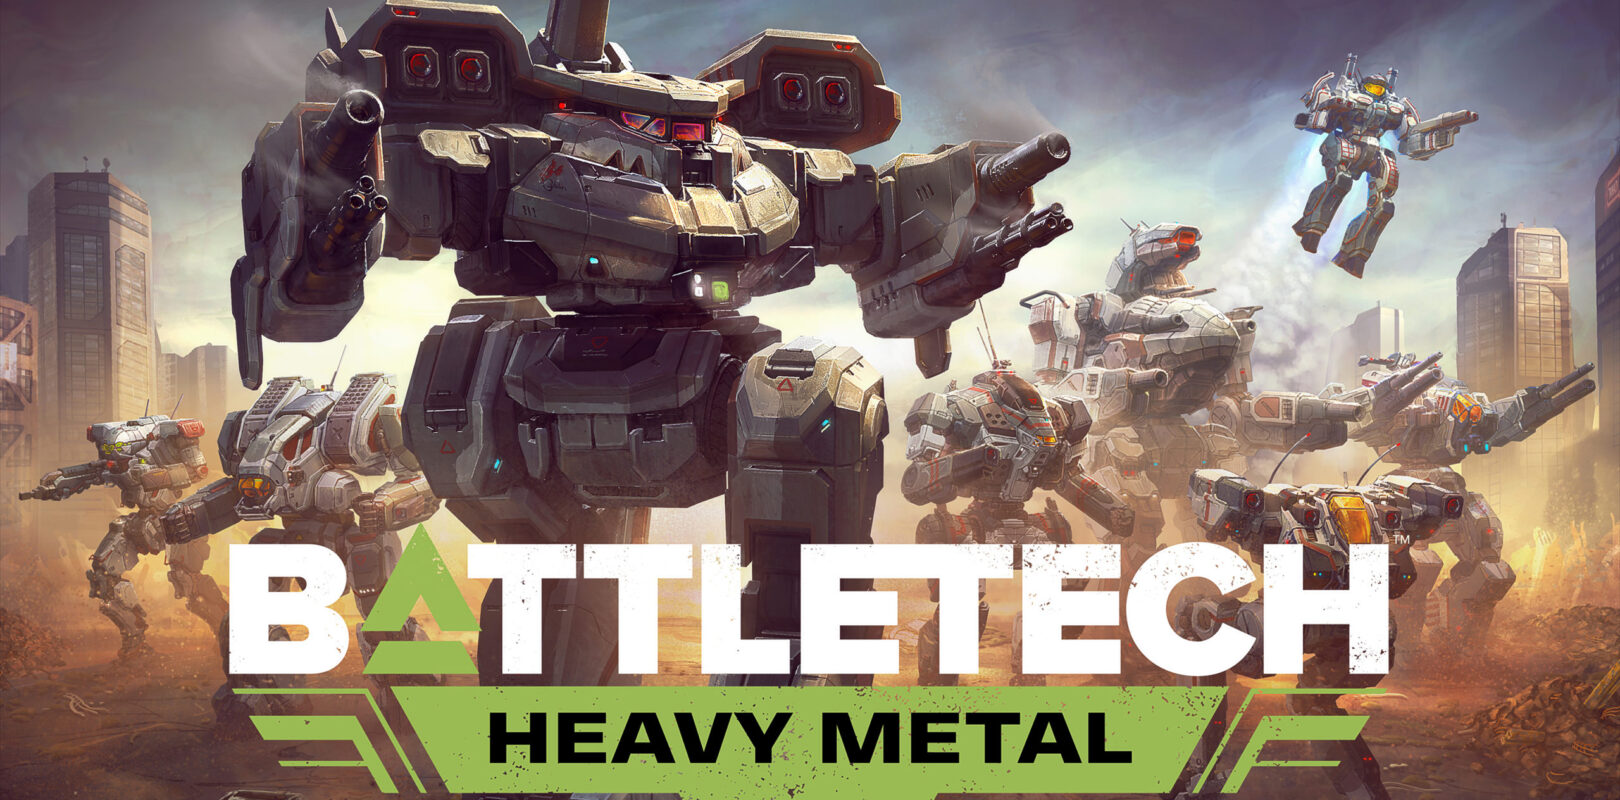 battletech heavy metal should i start new campaign